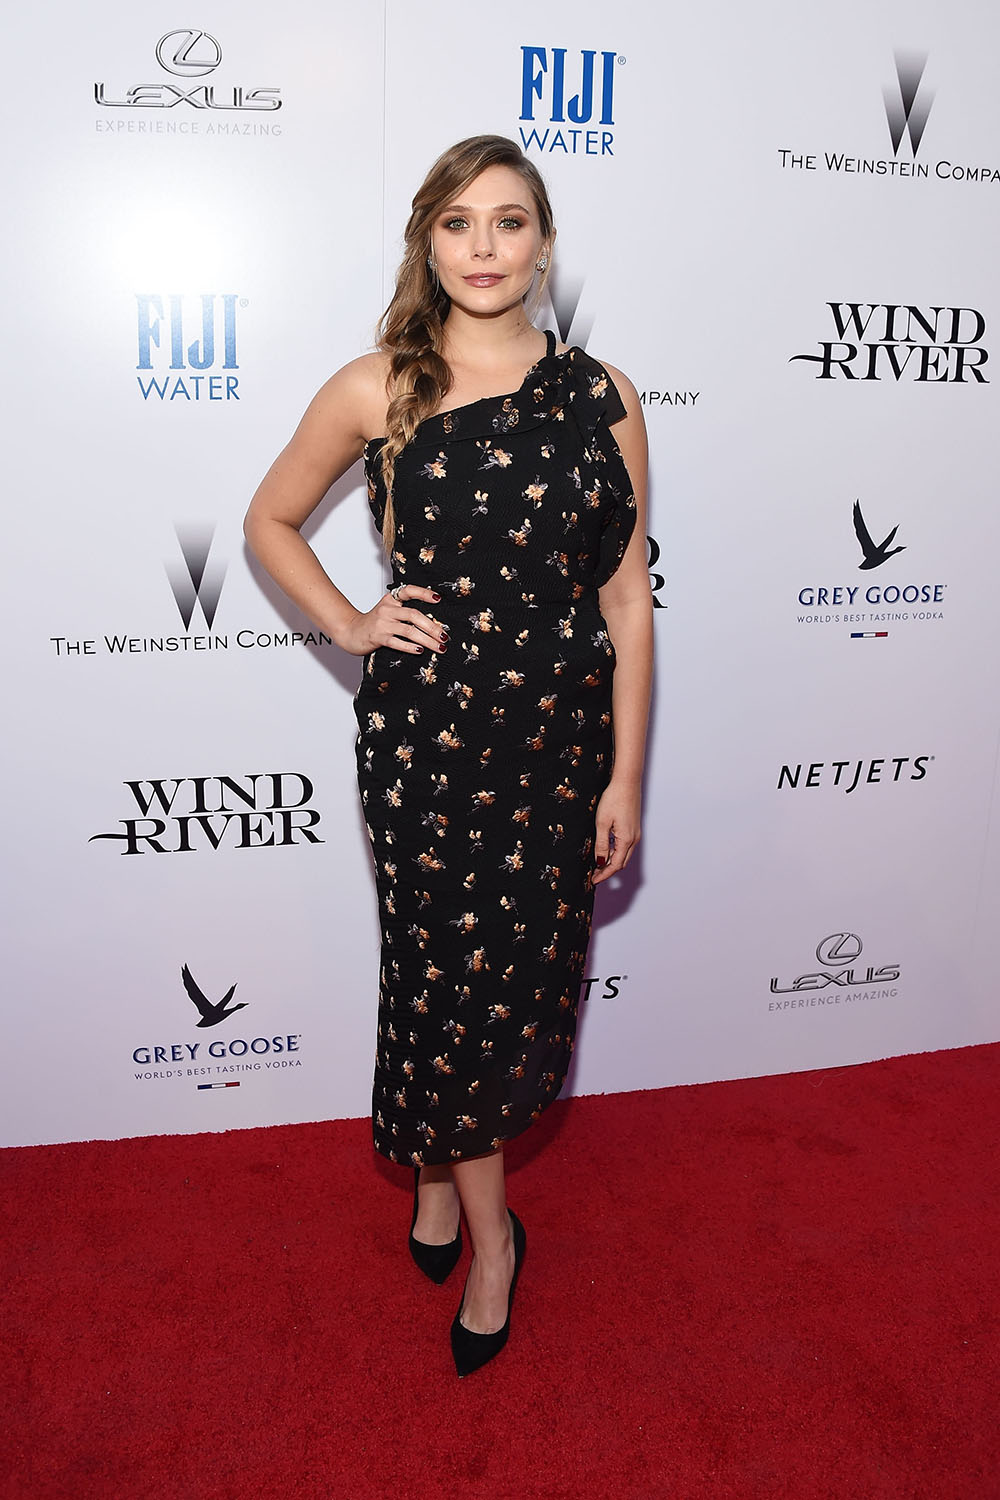 Elizabeth Olsen attends the premiere of her latest film 'Wind River' wearing a Roland Mouret dress.